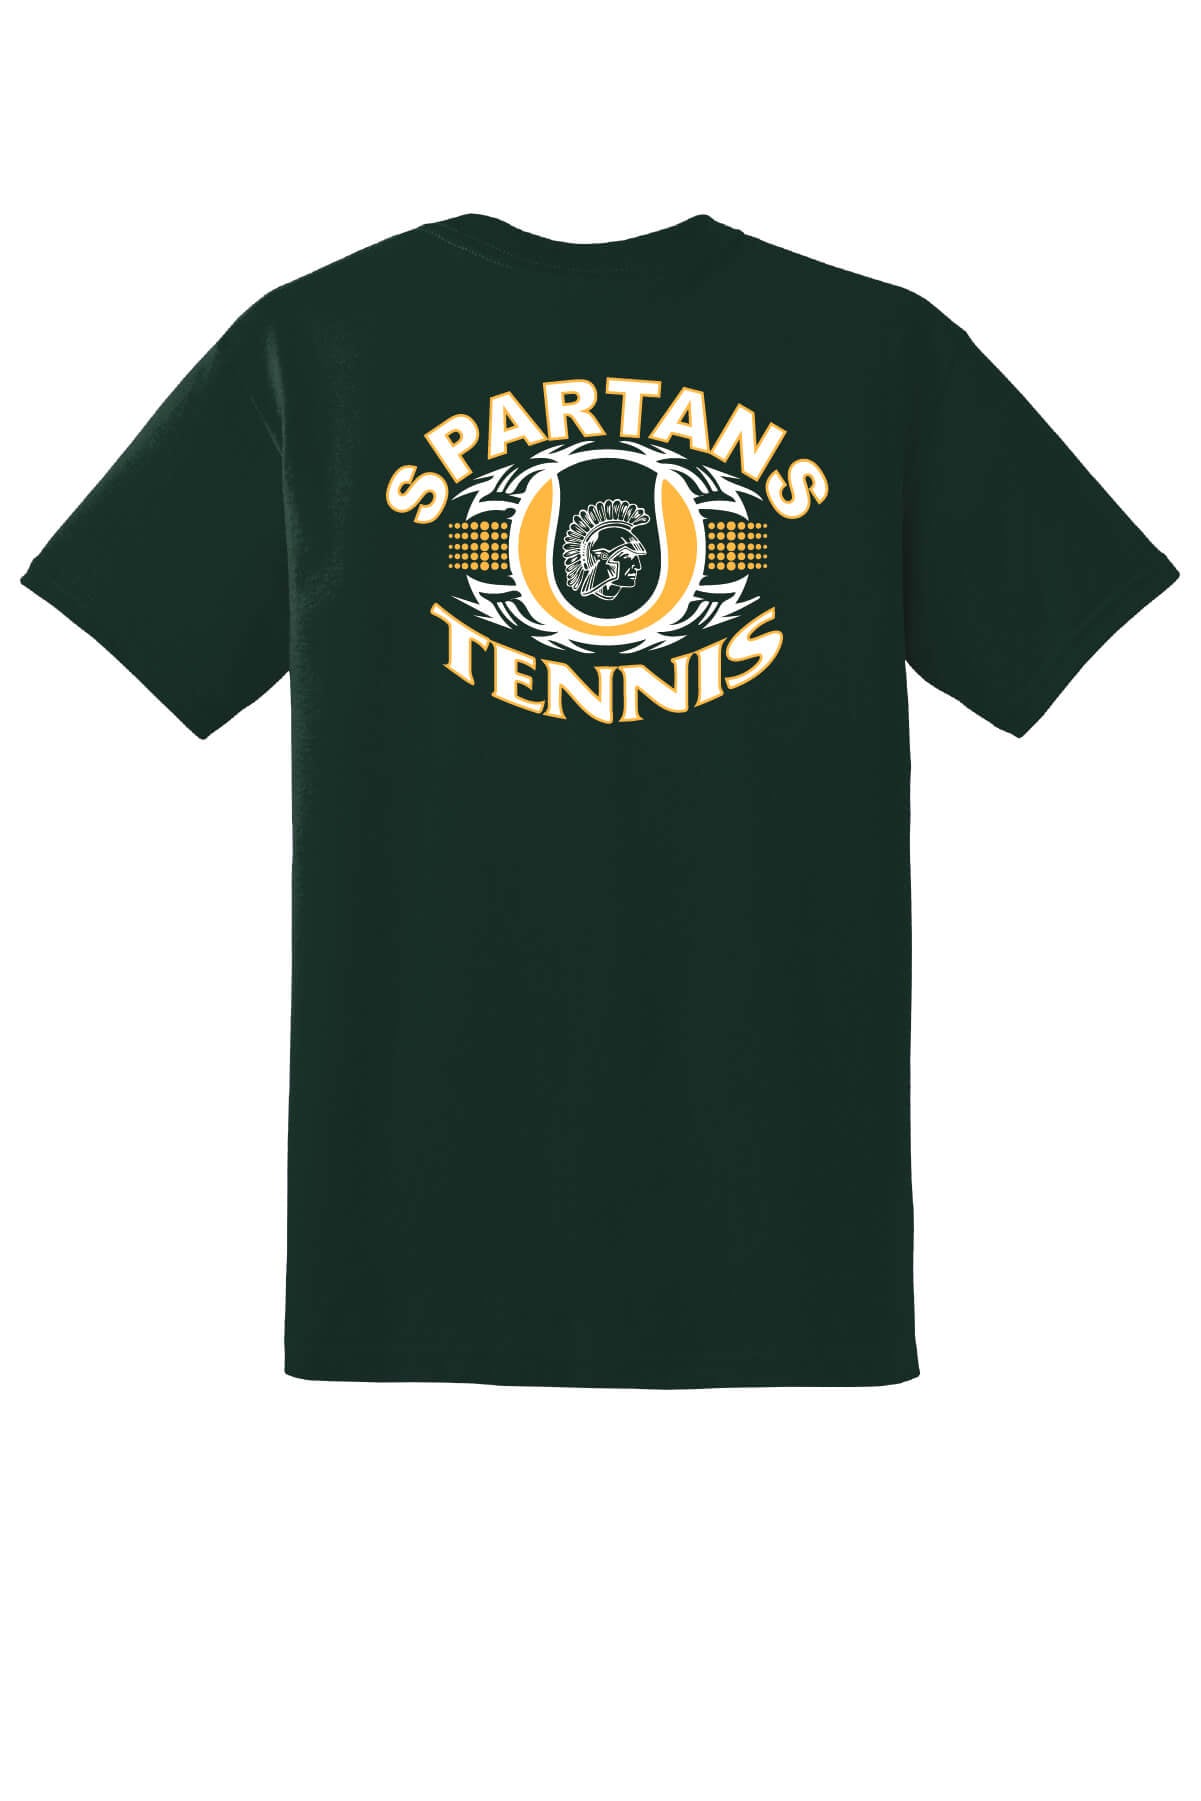 Spartans Short Sleeve T-Shirt back-green